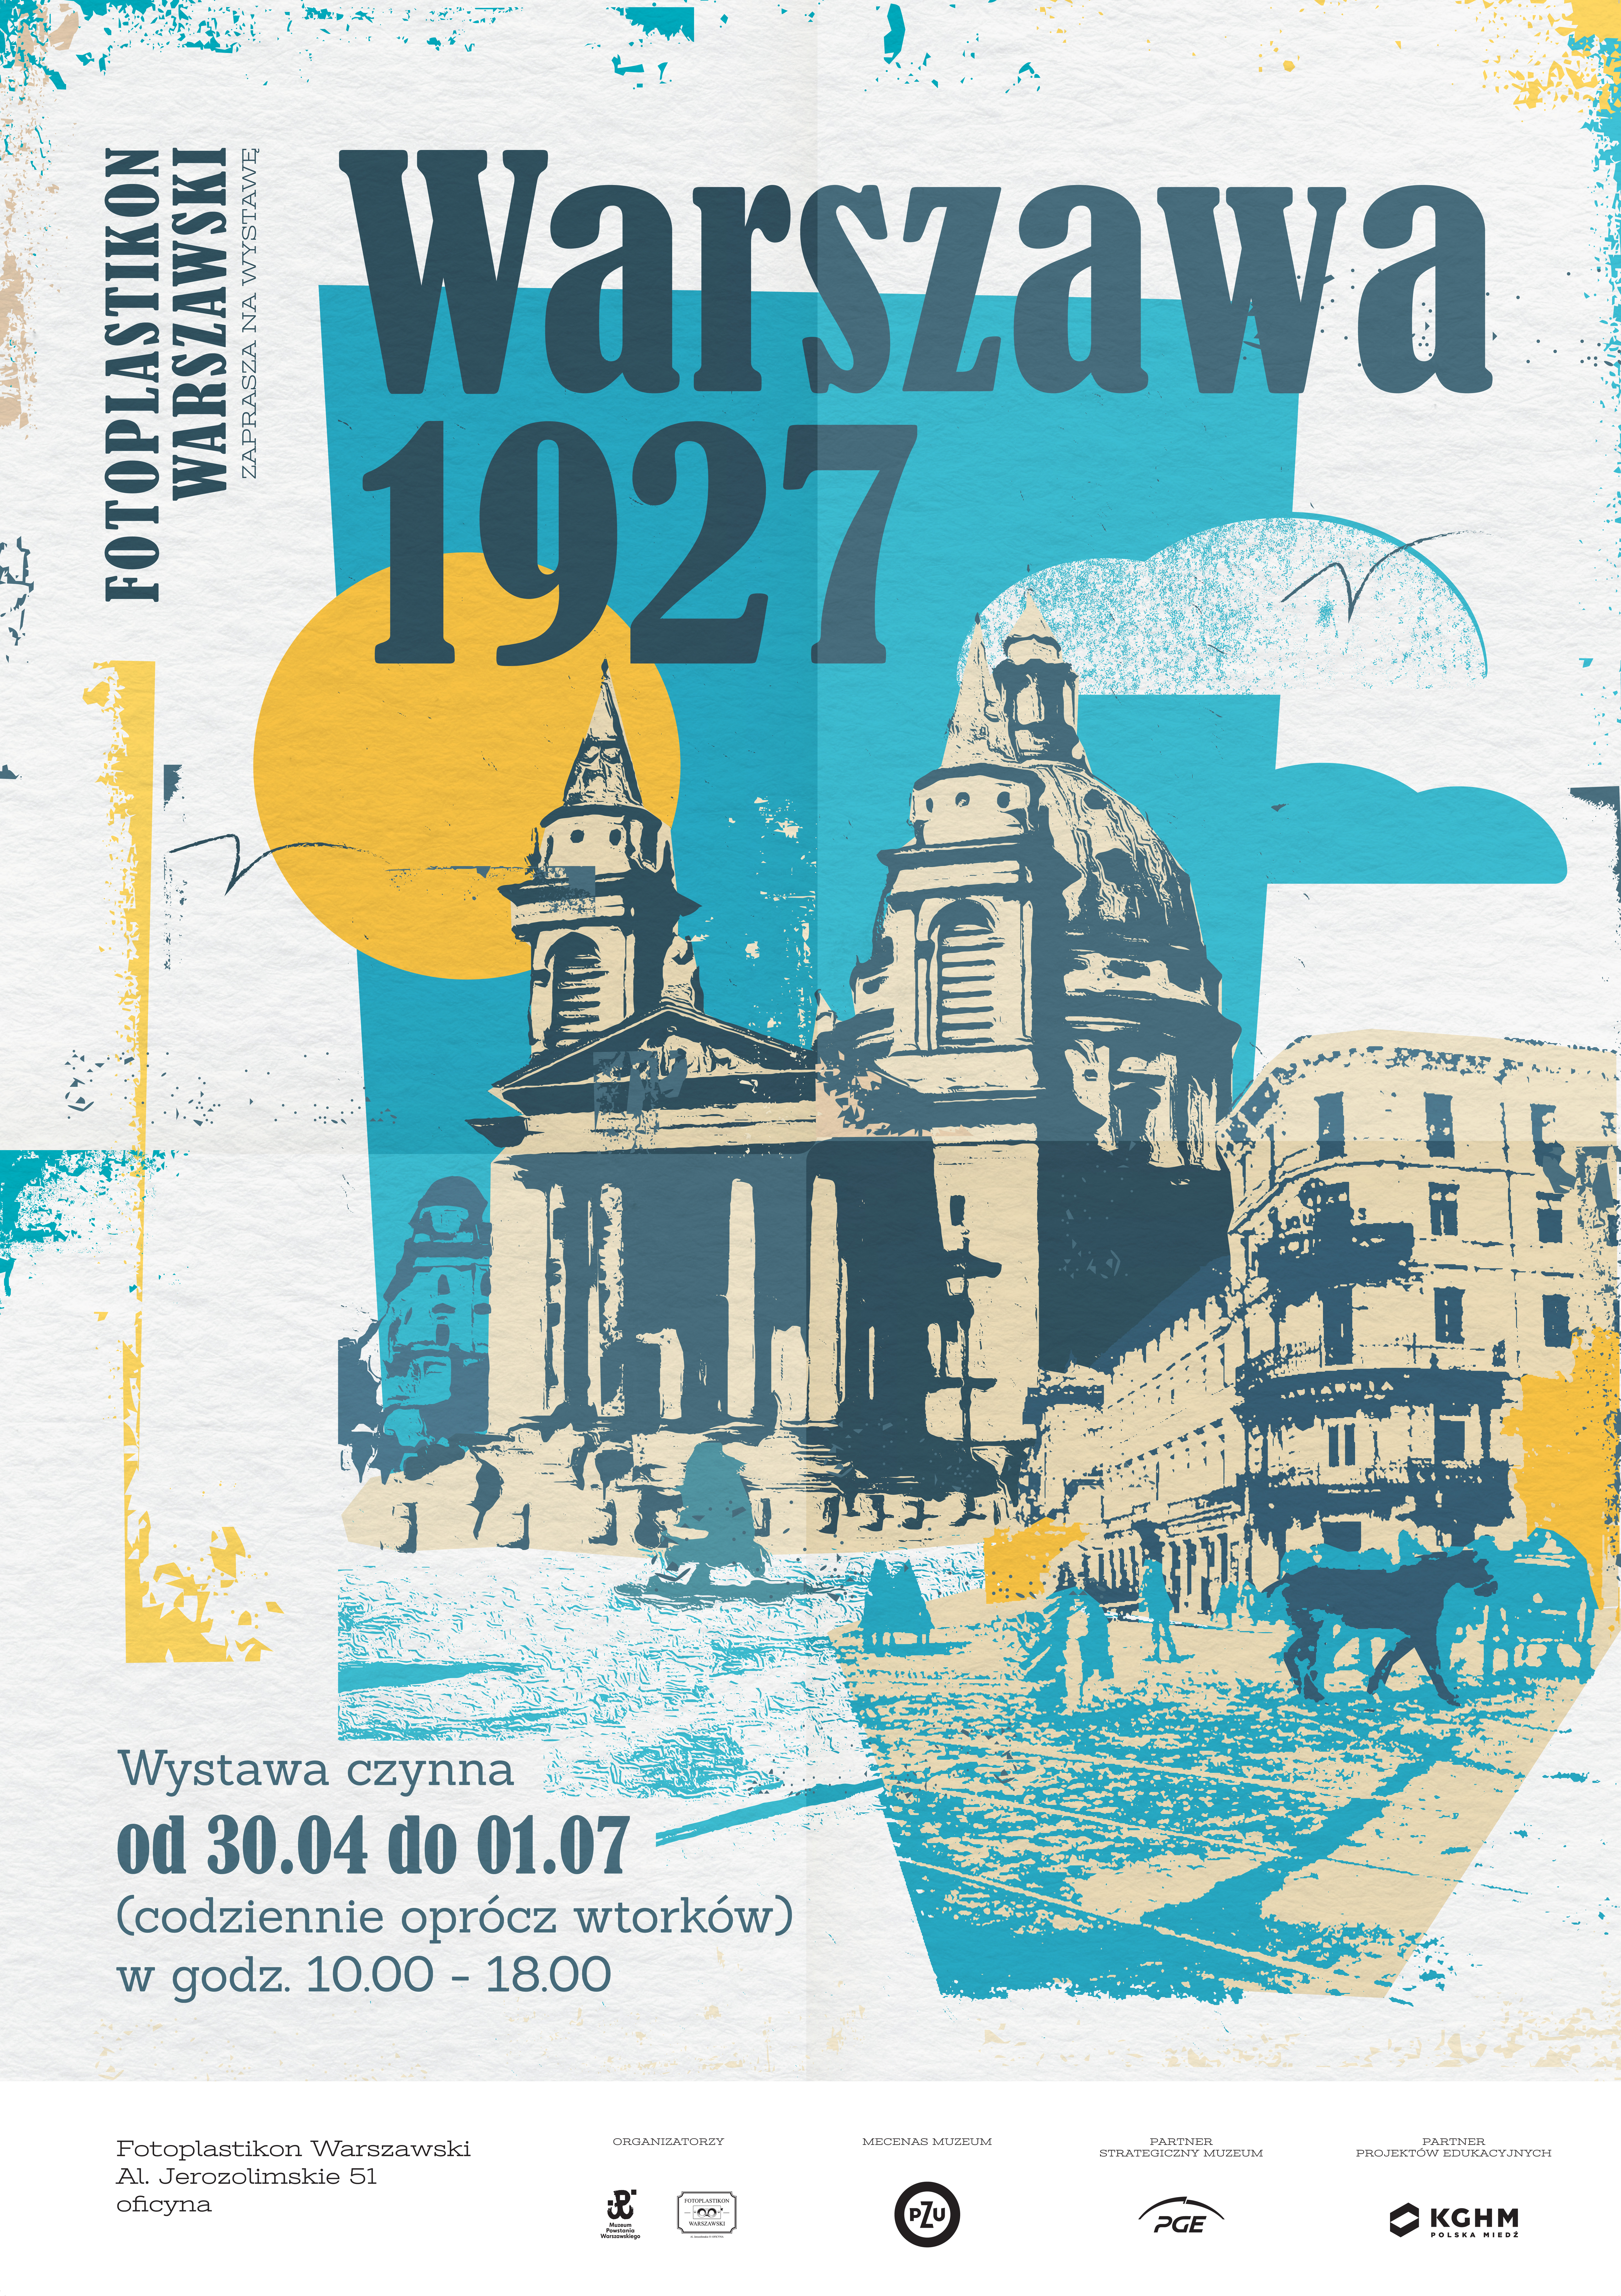 Warszawa1927